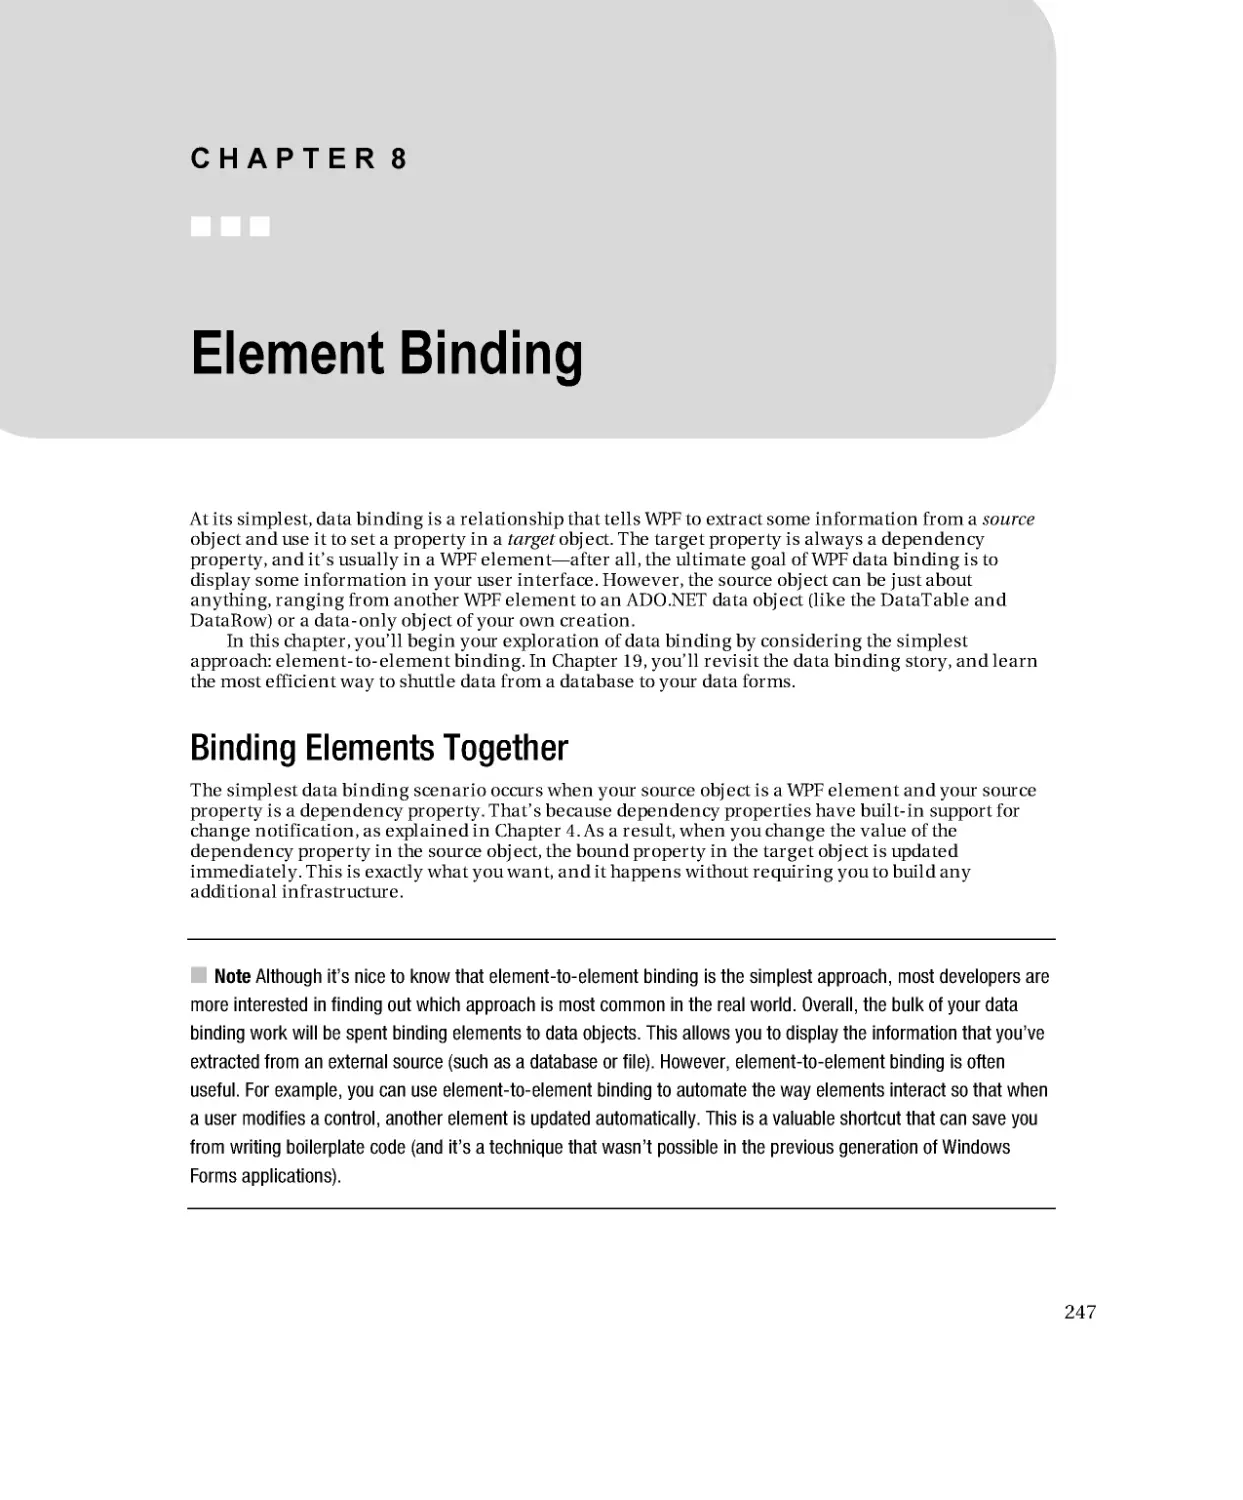 Element Binding